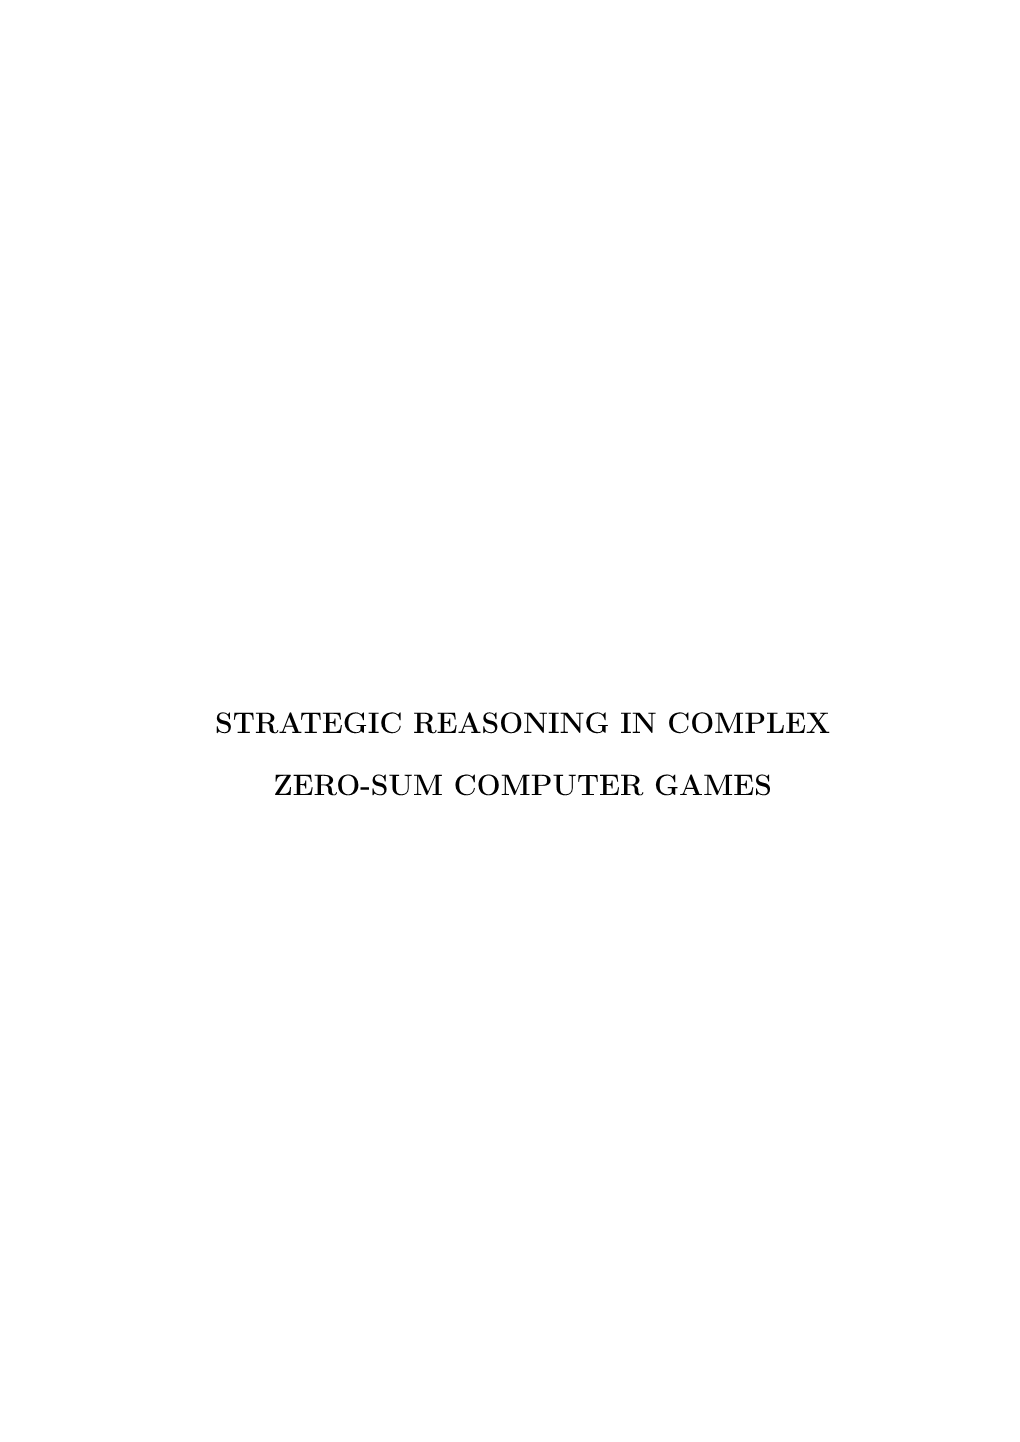 Strategic Reasoning in Complex Zero-Sum Computer Games / Anderson Rocha Tavares